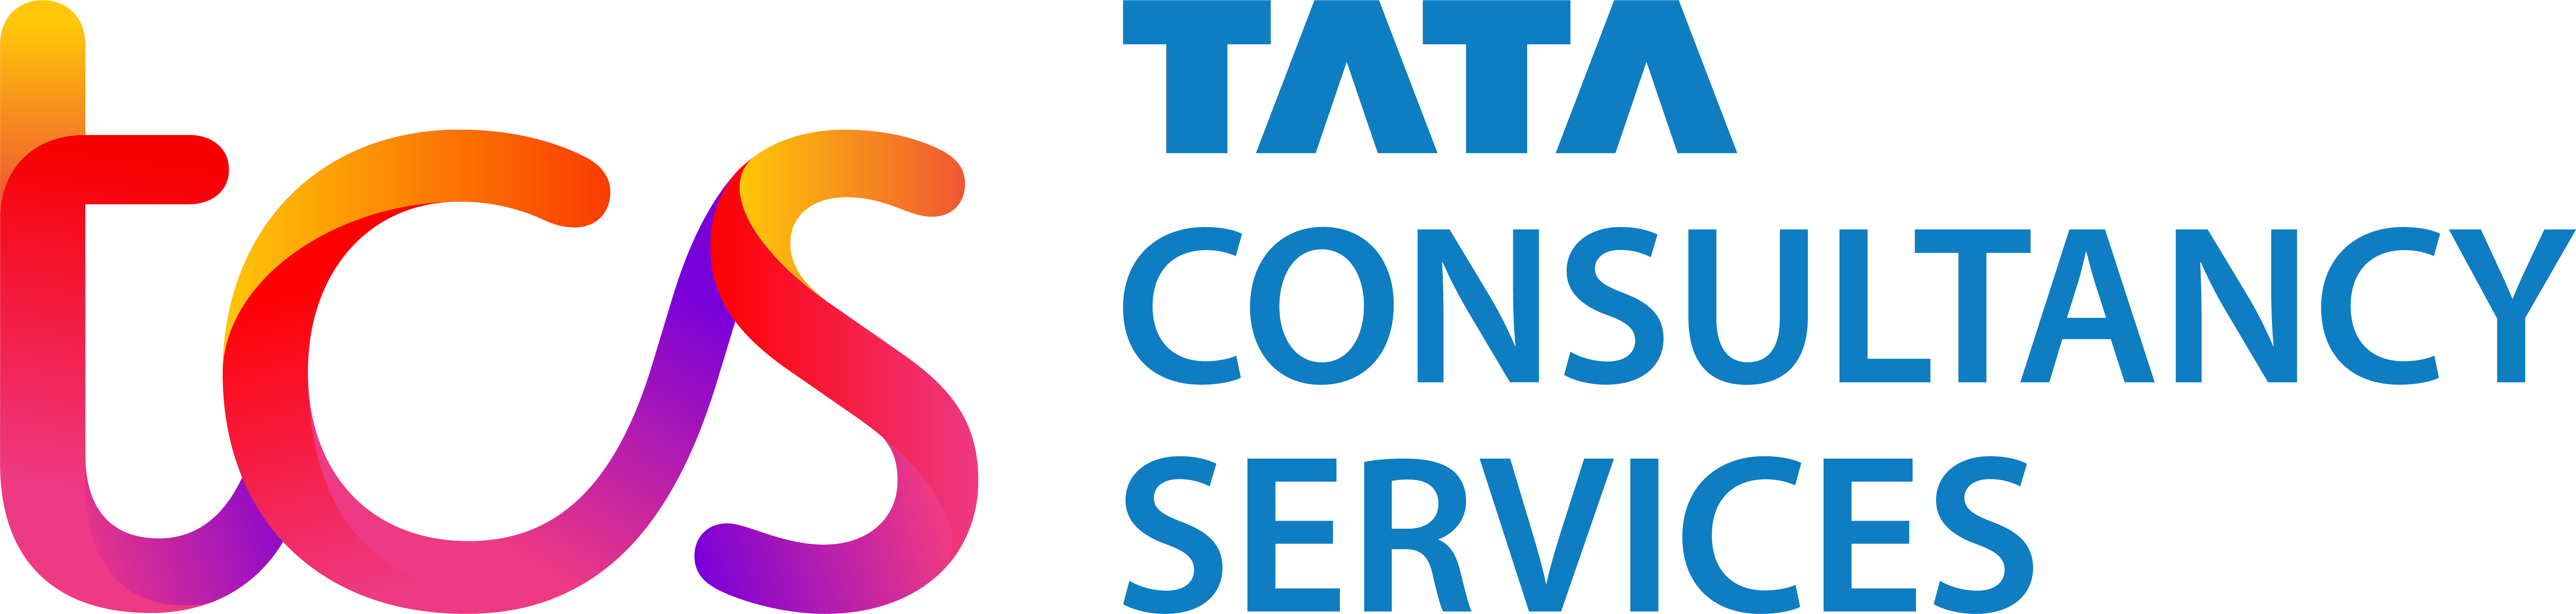 TCS - Tata Consultancy Services Canada logo